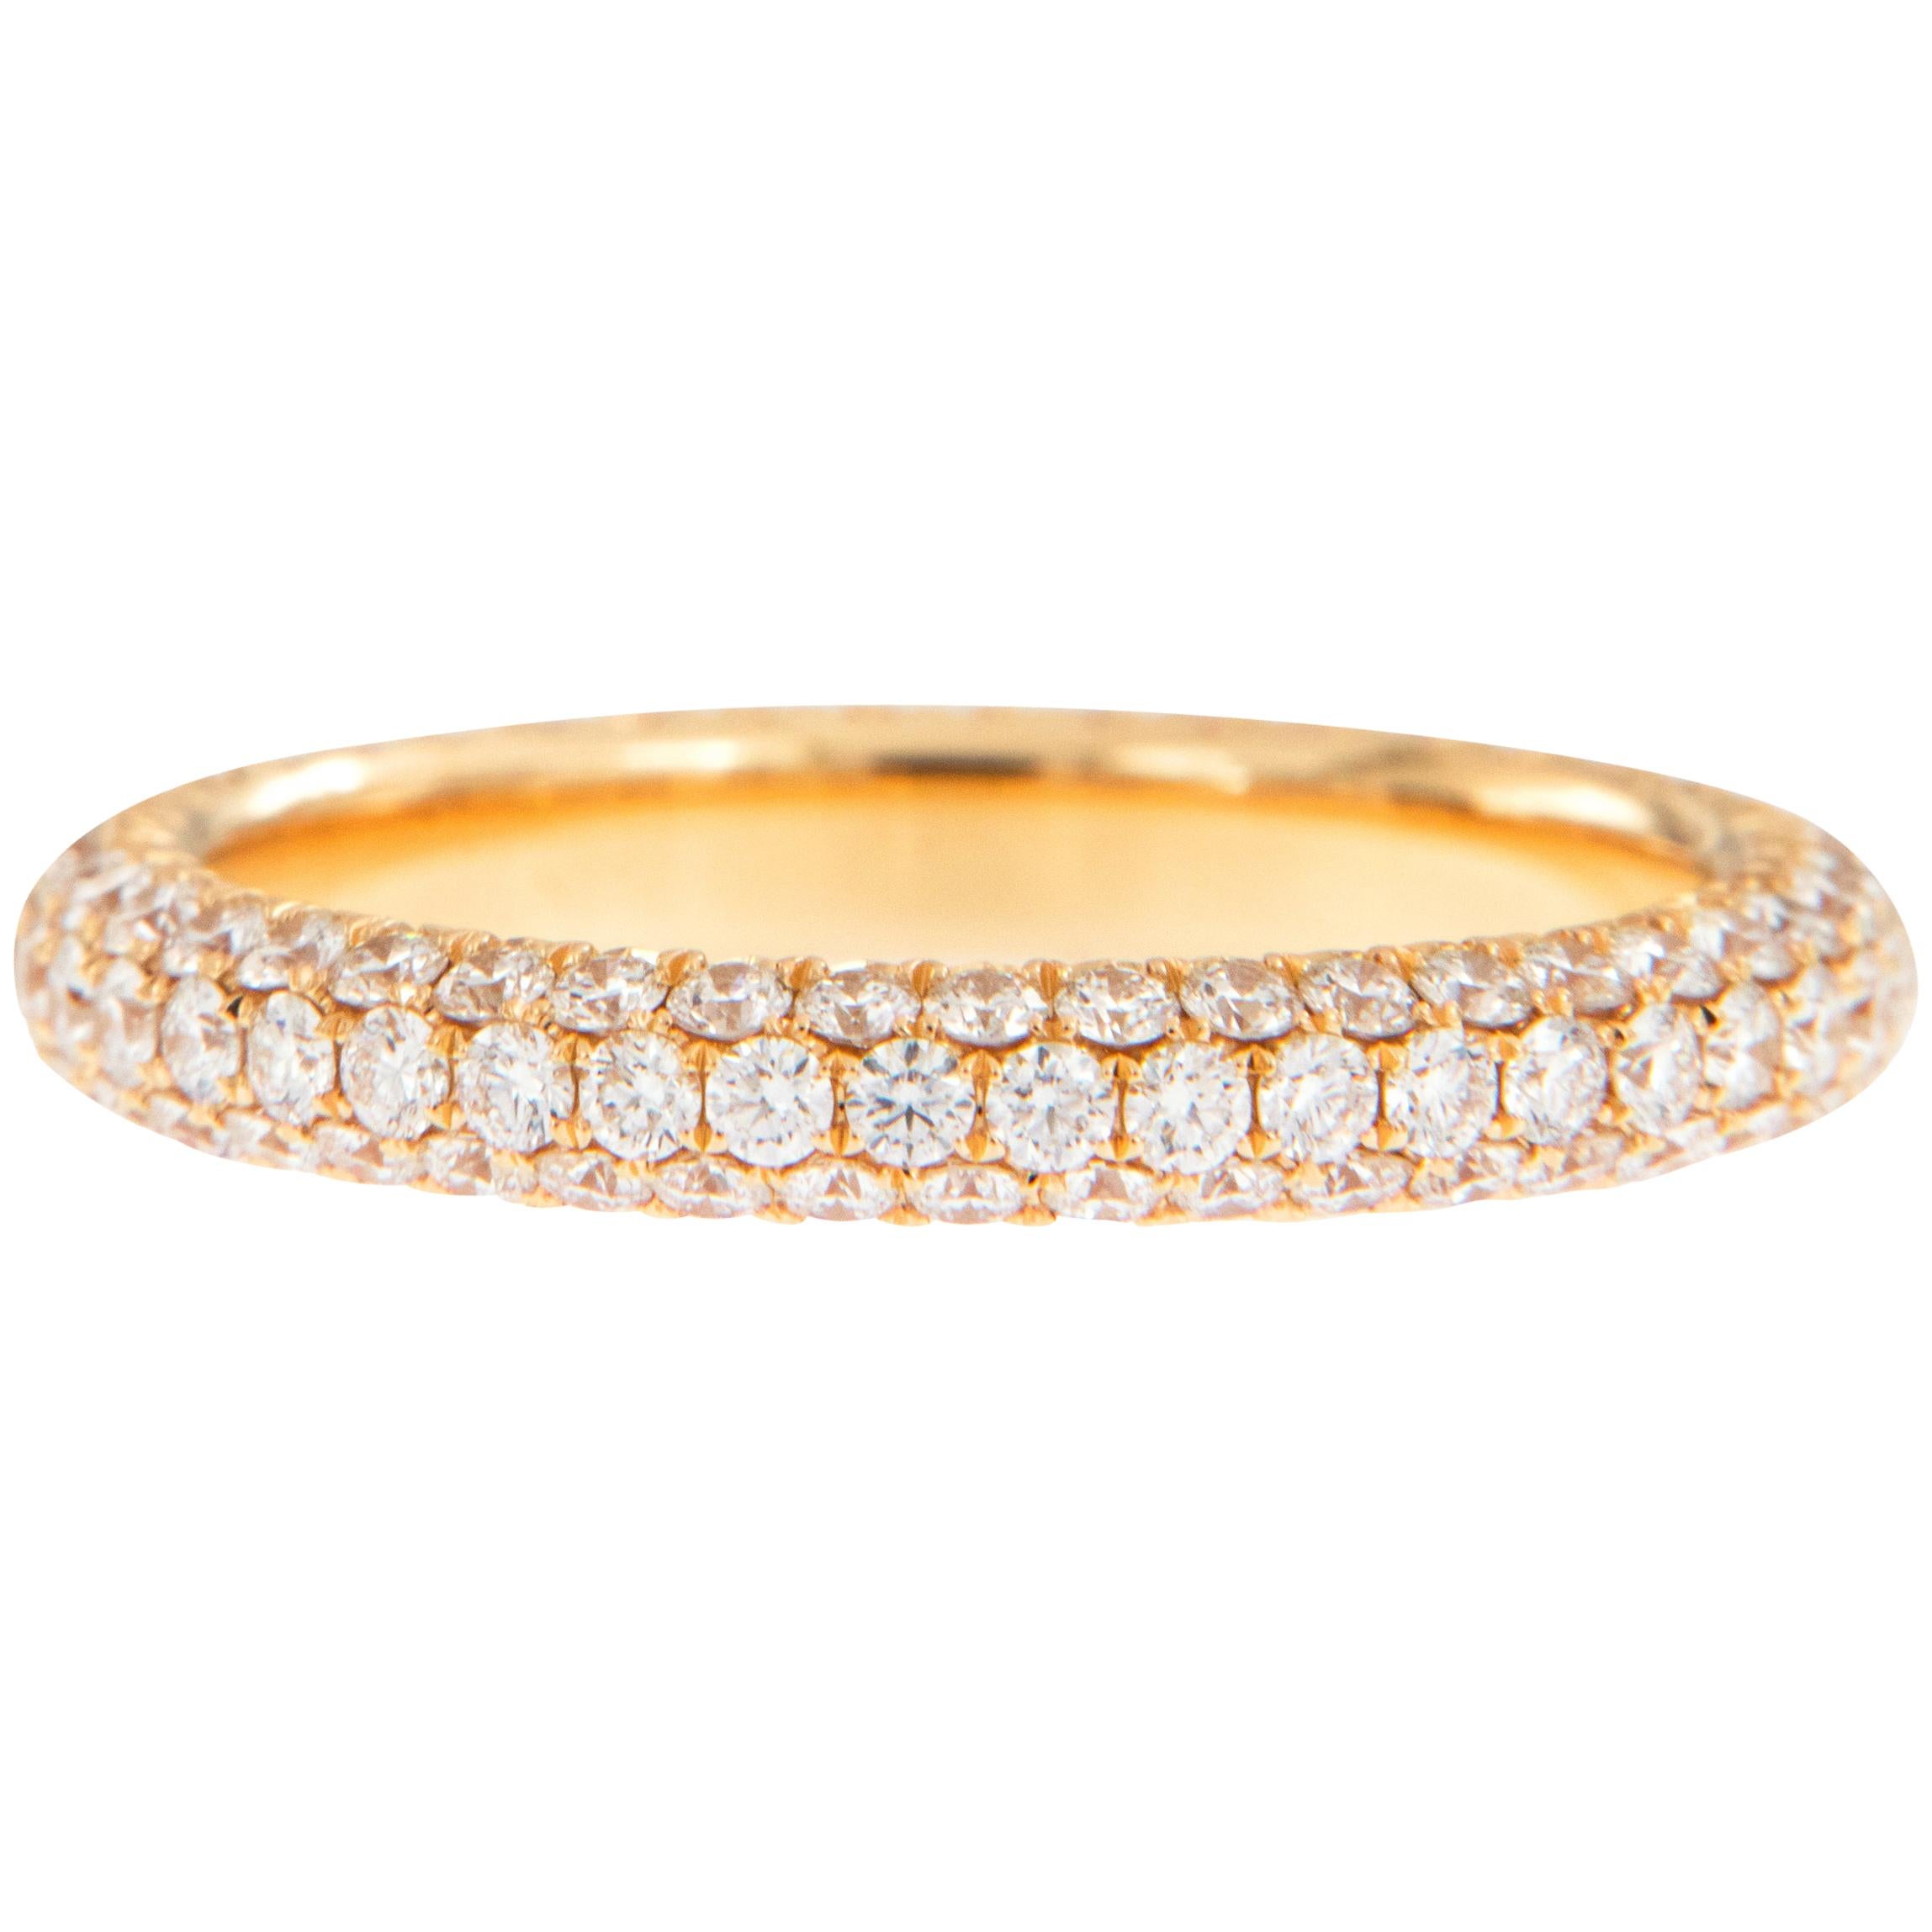 William Rosenberg 18 Karat Rose Gold 1.51 Carat Pave' Diamond Eternity Ring